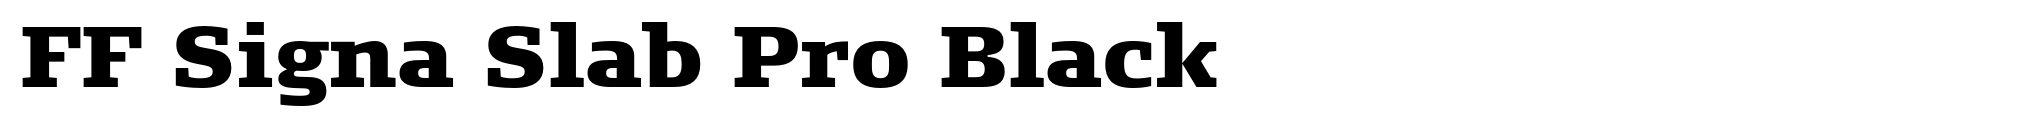 FF Signa Slab Pro Black image